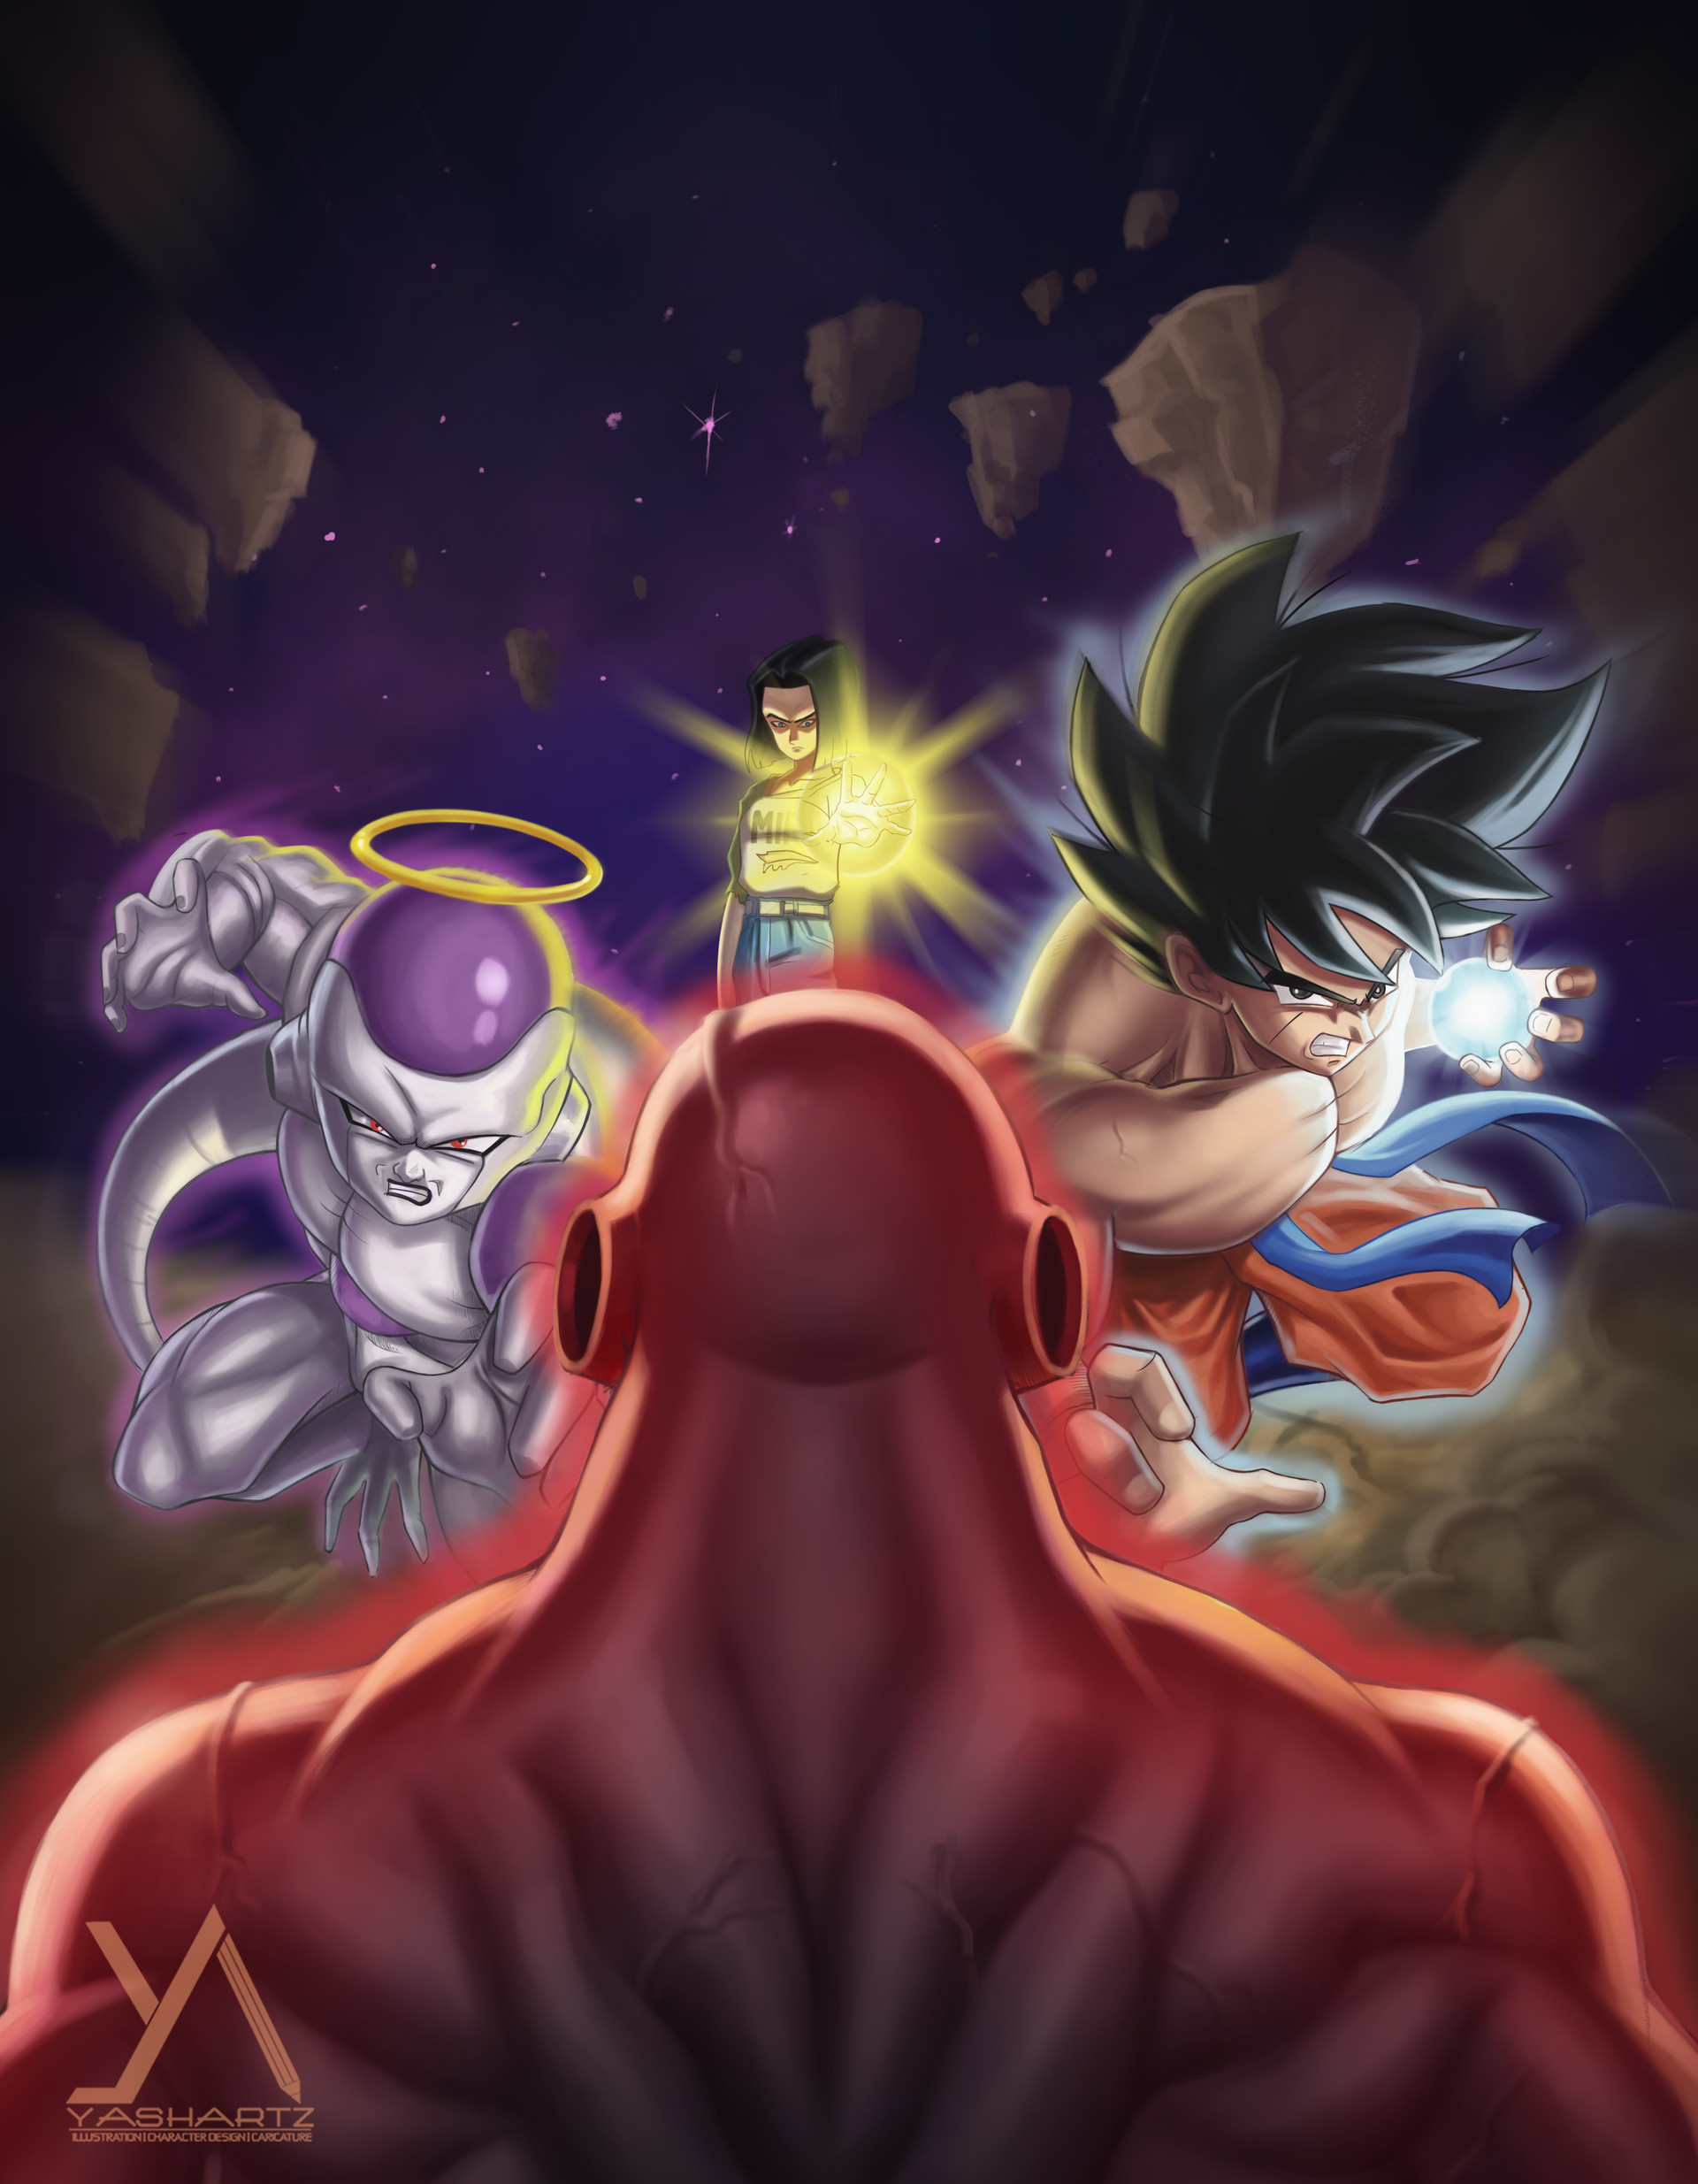 ArtStation - Dragon Ball Super Tournament Finale - Goku, Frieza and Android  17 vs Jiren the grey